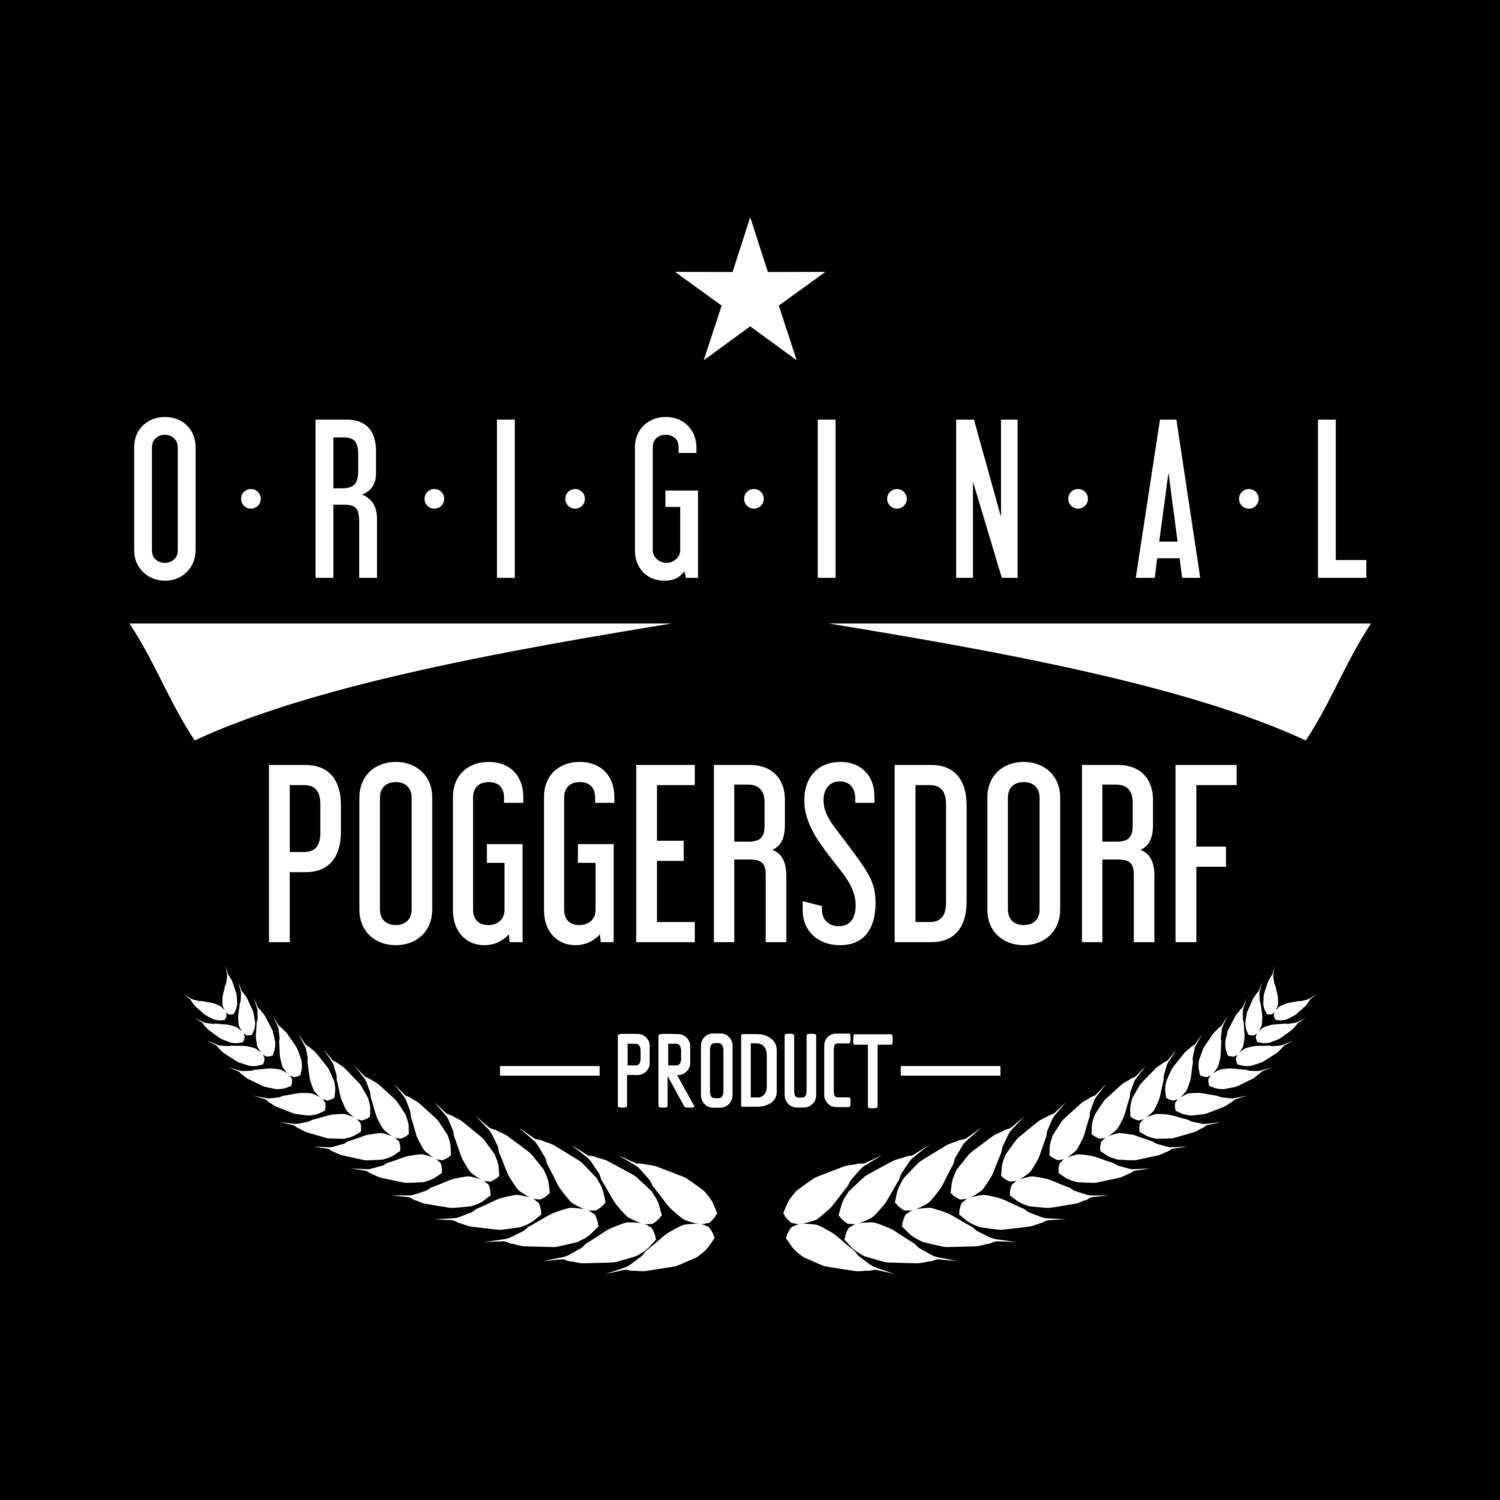 Poggersdorf T-Shirt »Original Product«